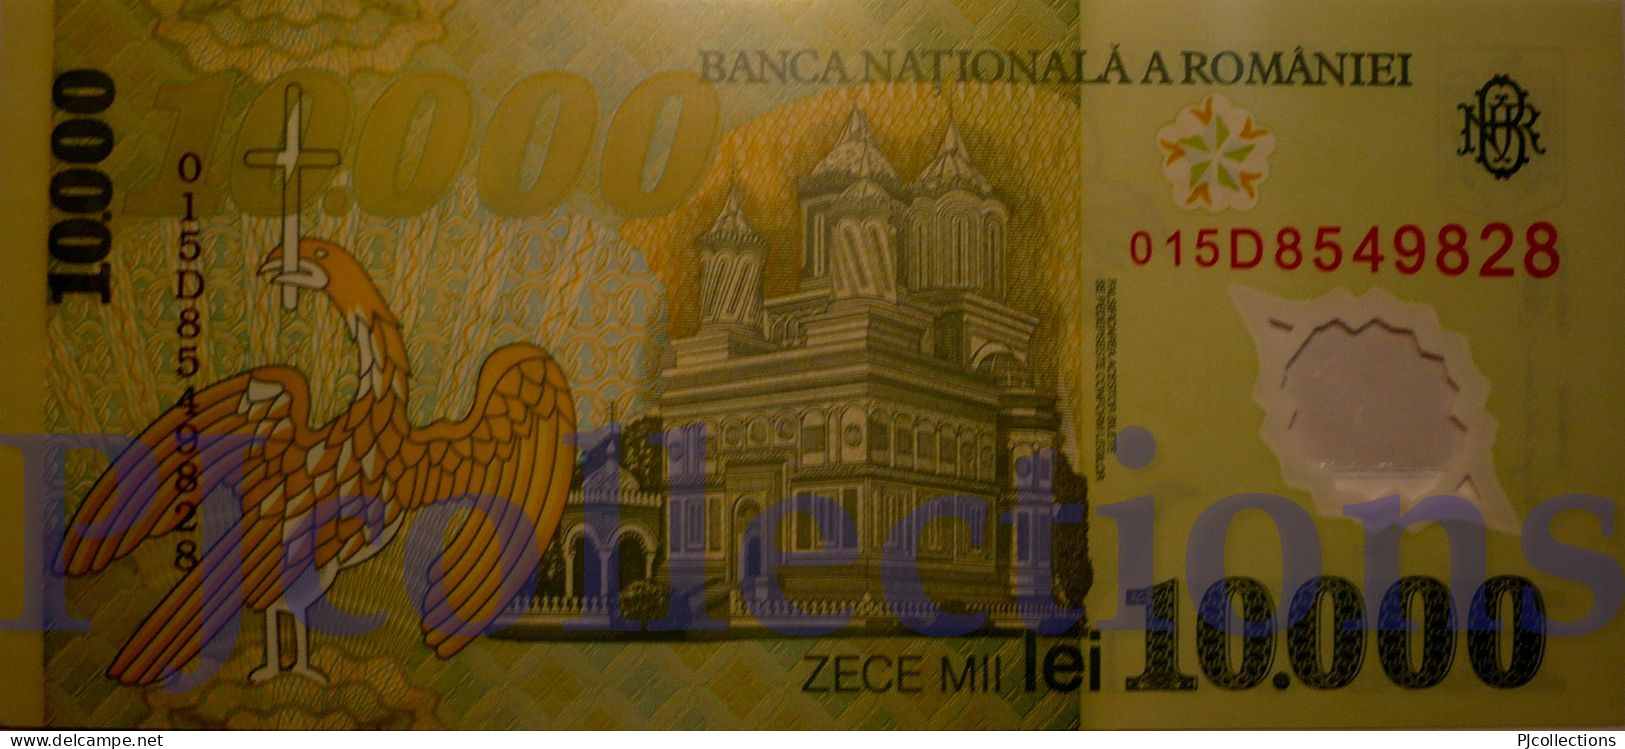 ROMANIA 10000 LEI 2000 PICK 112b POLYMER UNC - Romania